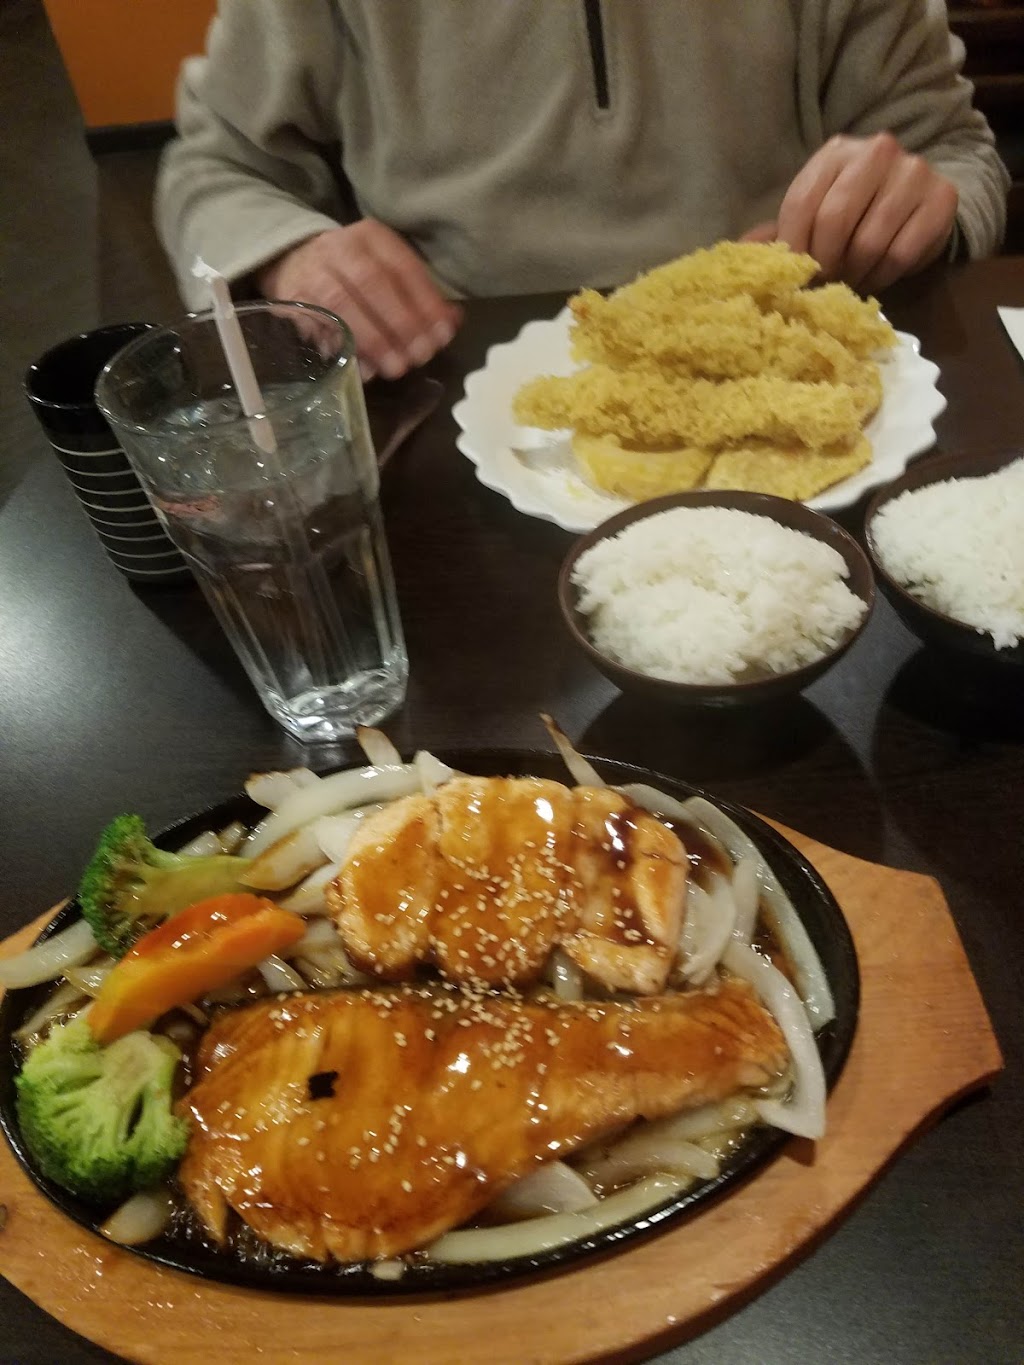 Sakana Sushi Asian Fusion Restaurant | 434 Town Center, New Britain, PA 18901 | Phone: (215) 345-1211